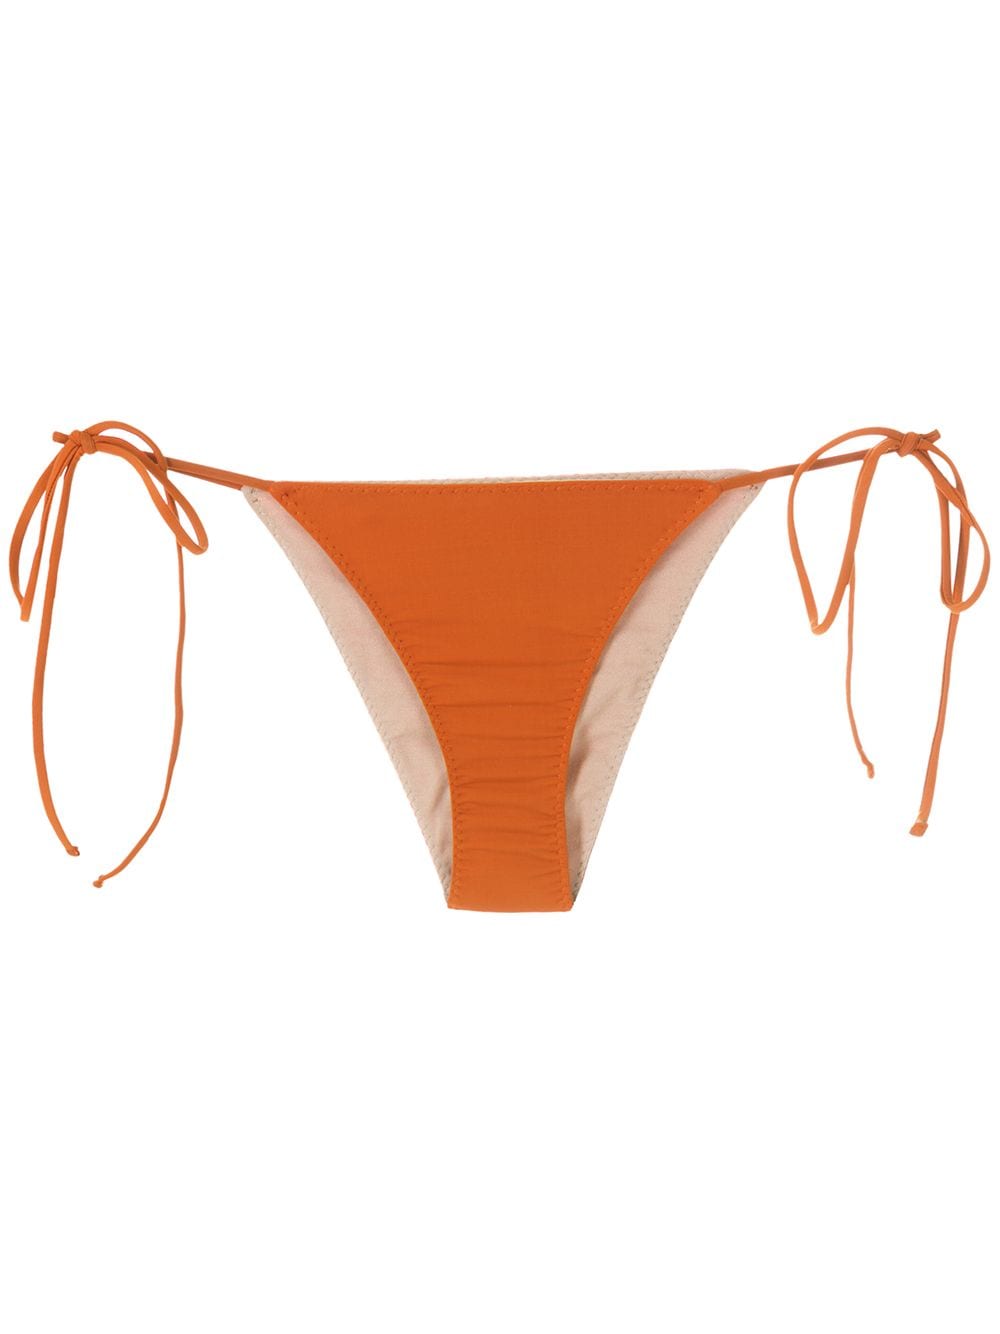 Clube Bossa Aava bikini bottoms - Orange von Clube Bossa